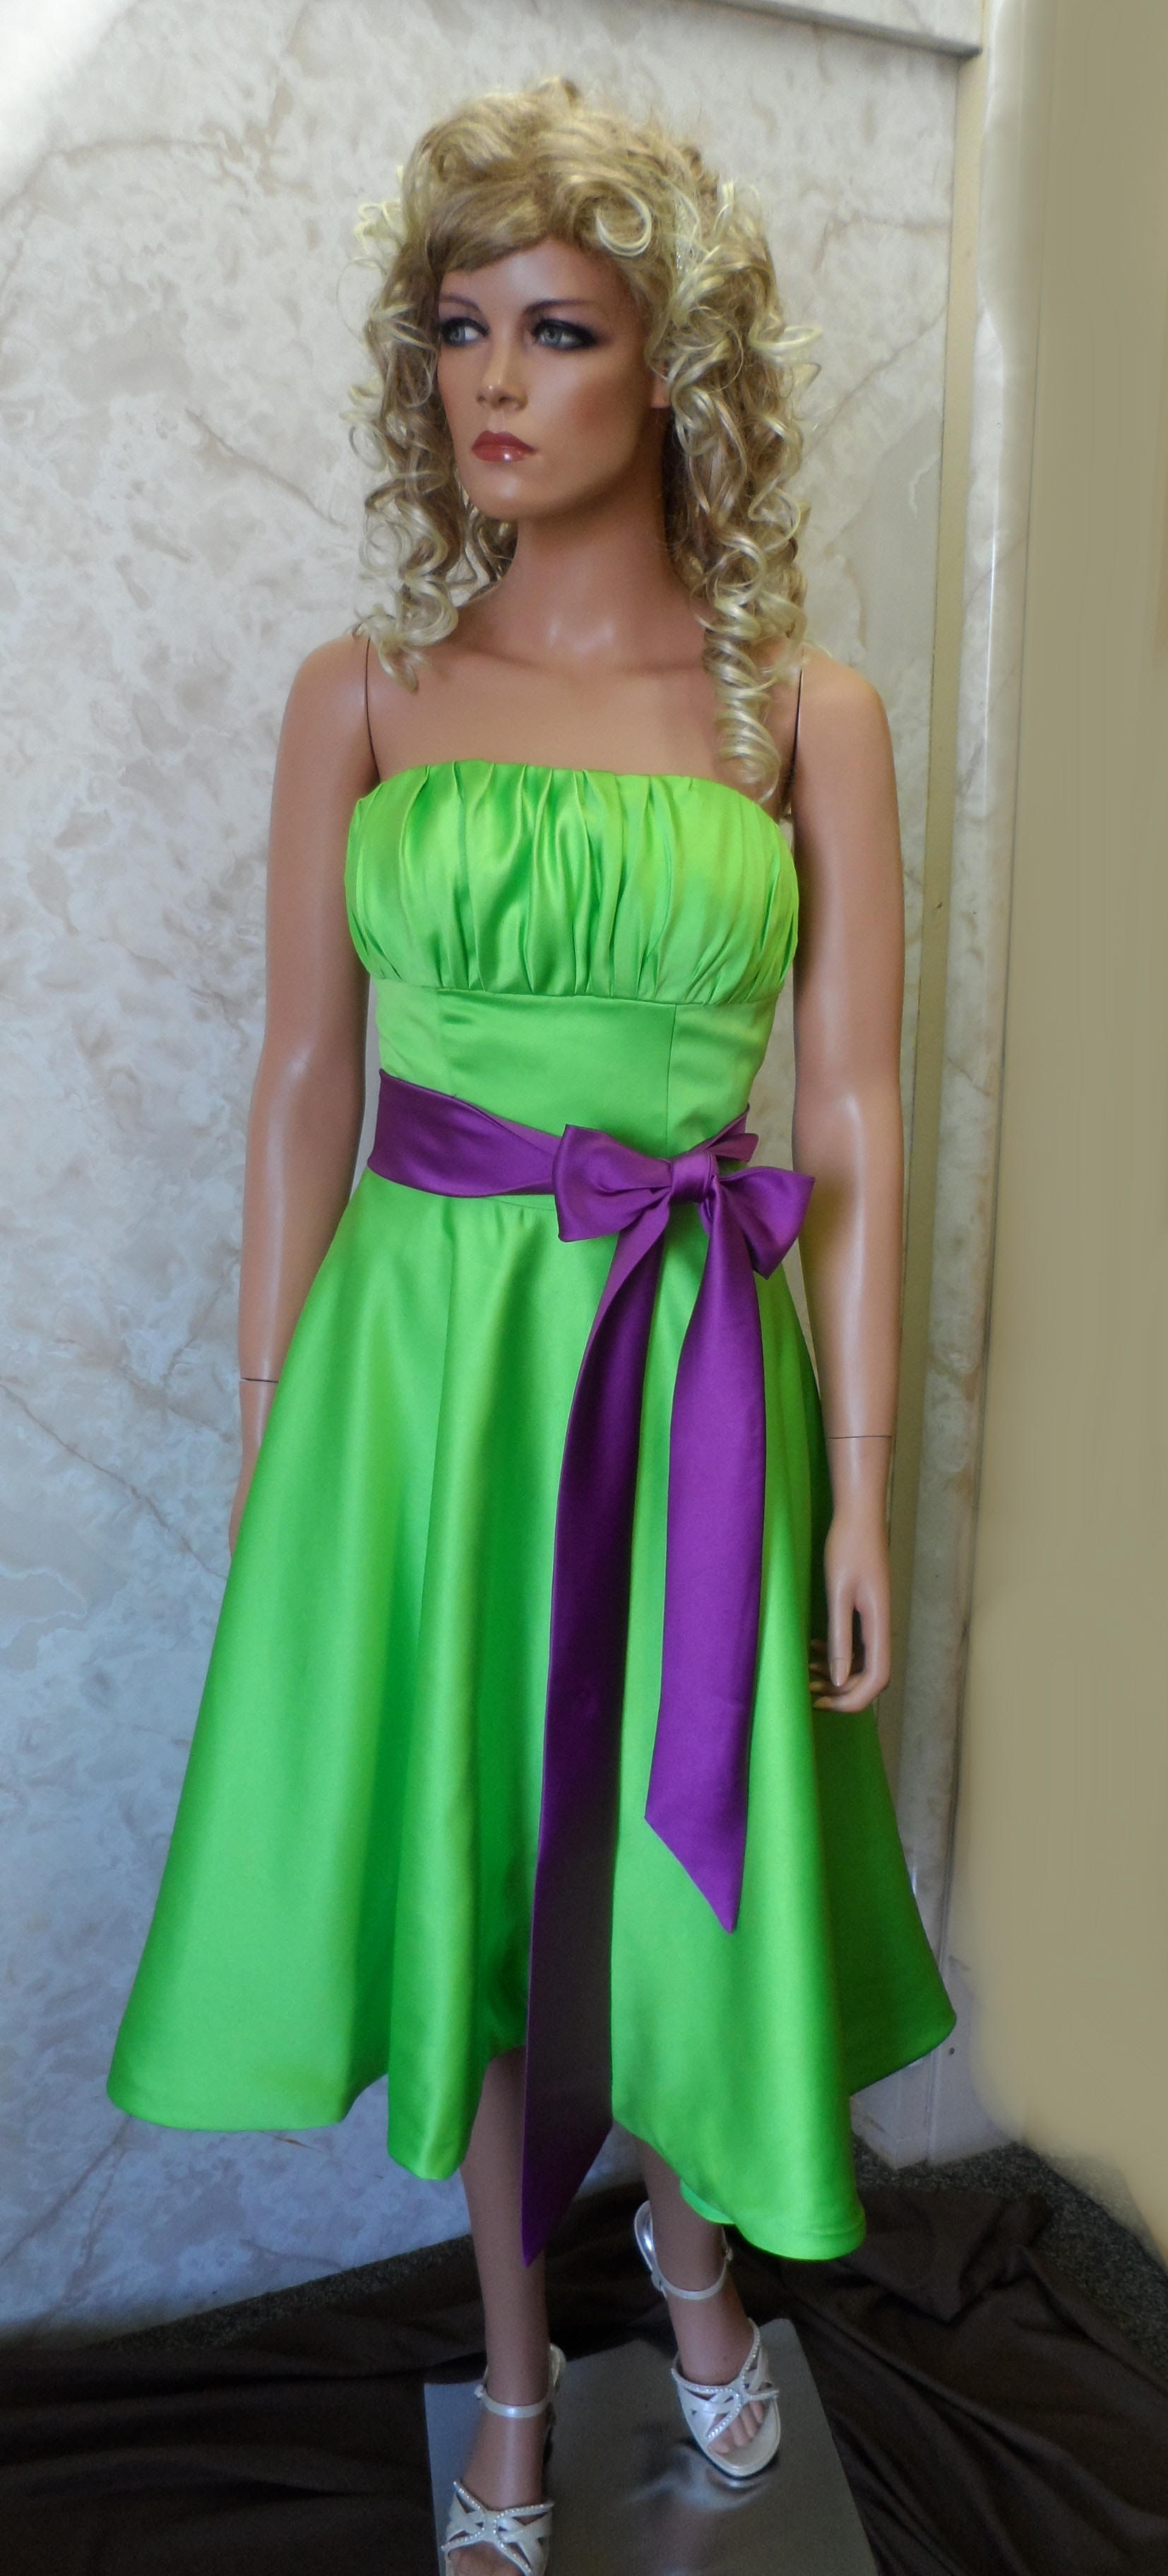 short green bridesmaid dress with purple sash